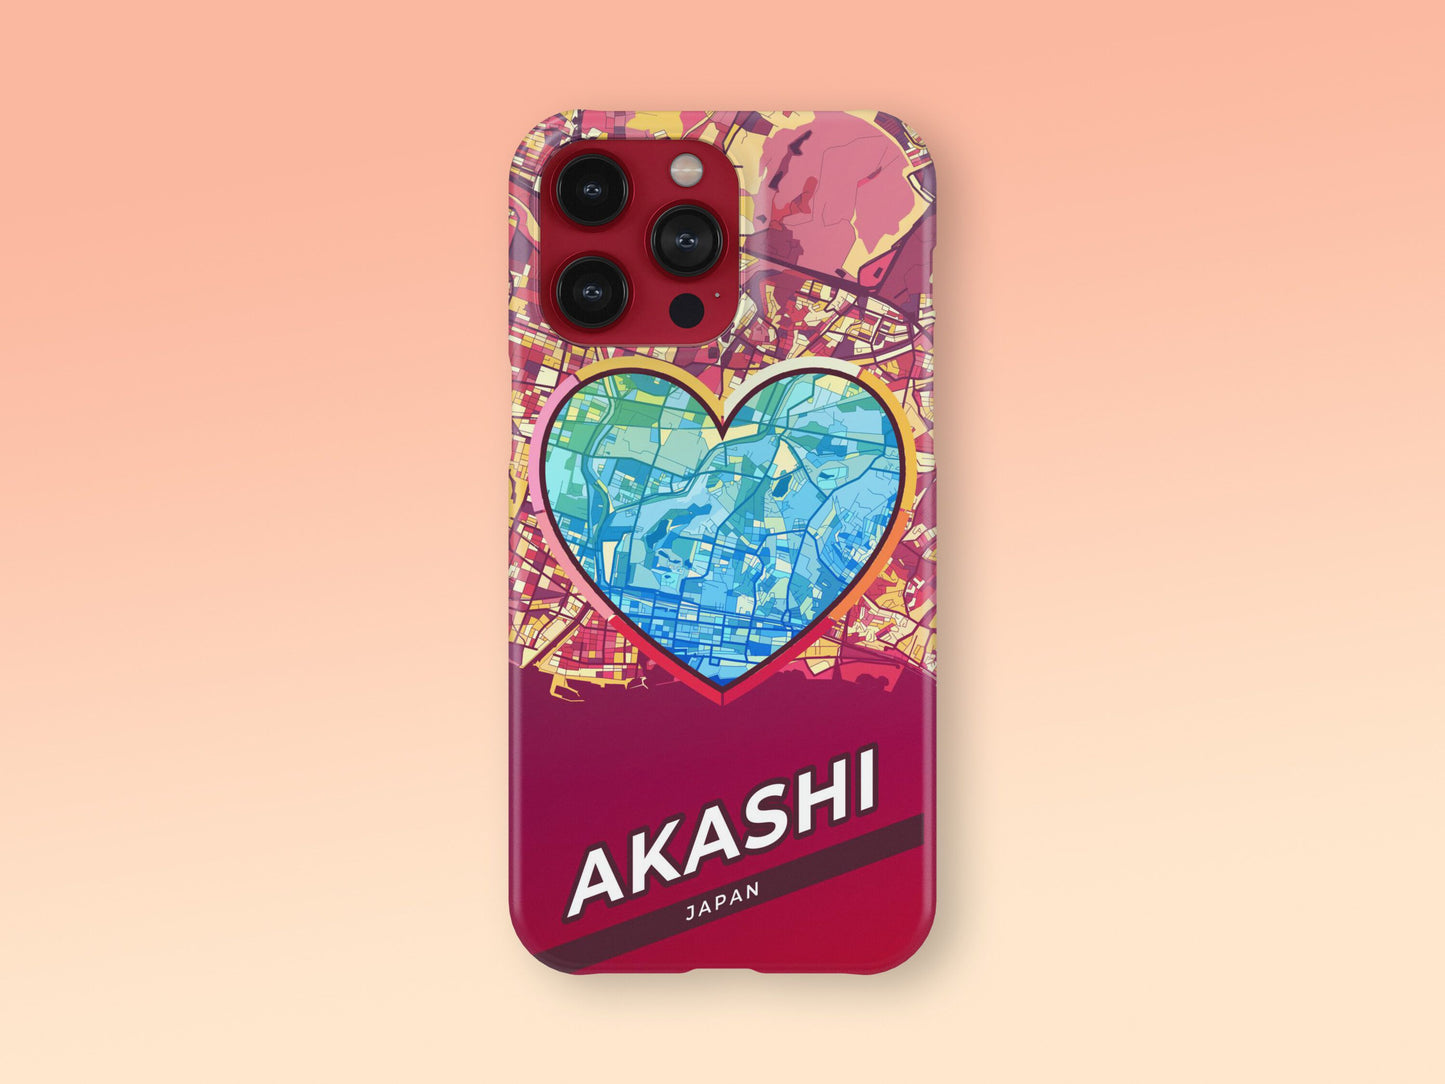 Akashi Japan slim phone case with colorful icon. Birthday, wedding or housewarming gift. Couple match cases. 2